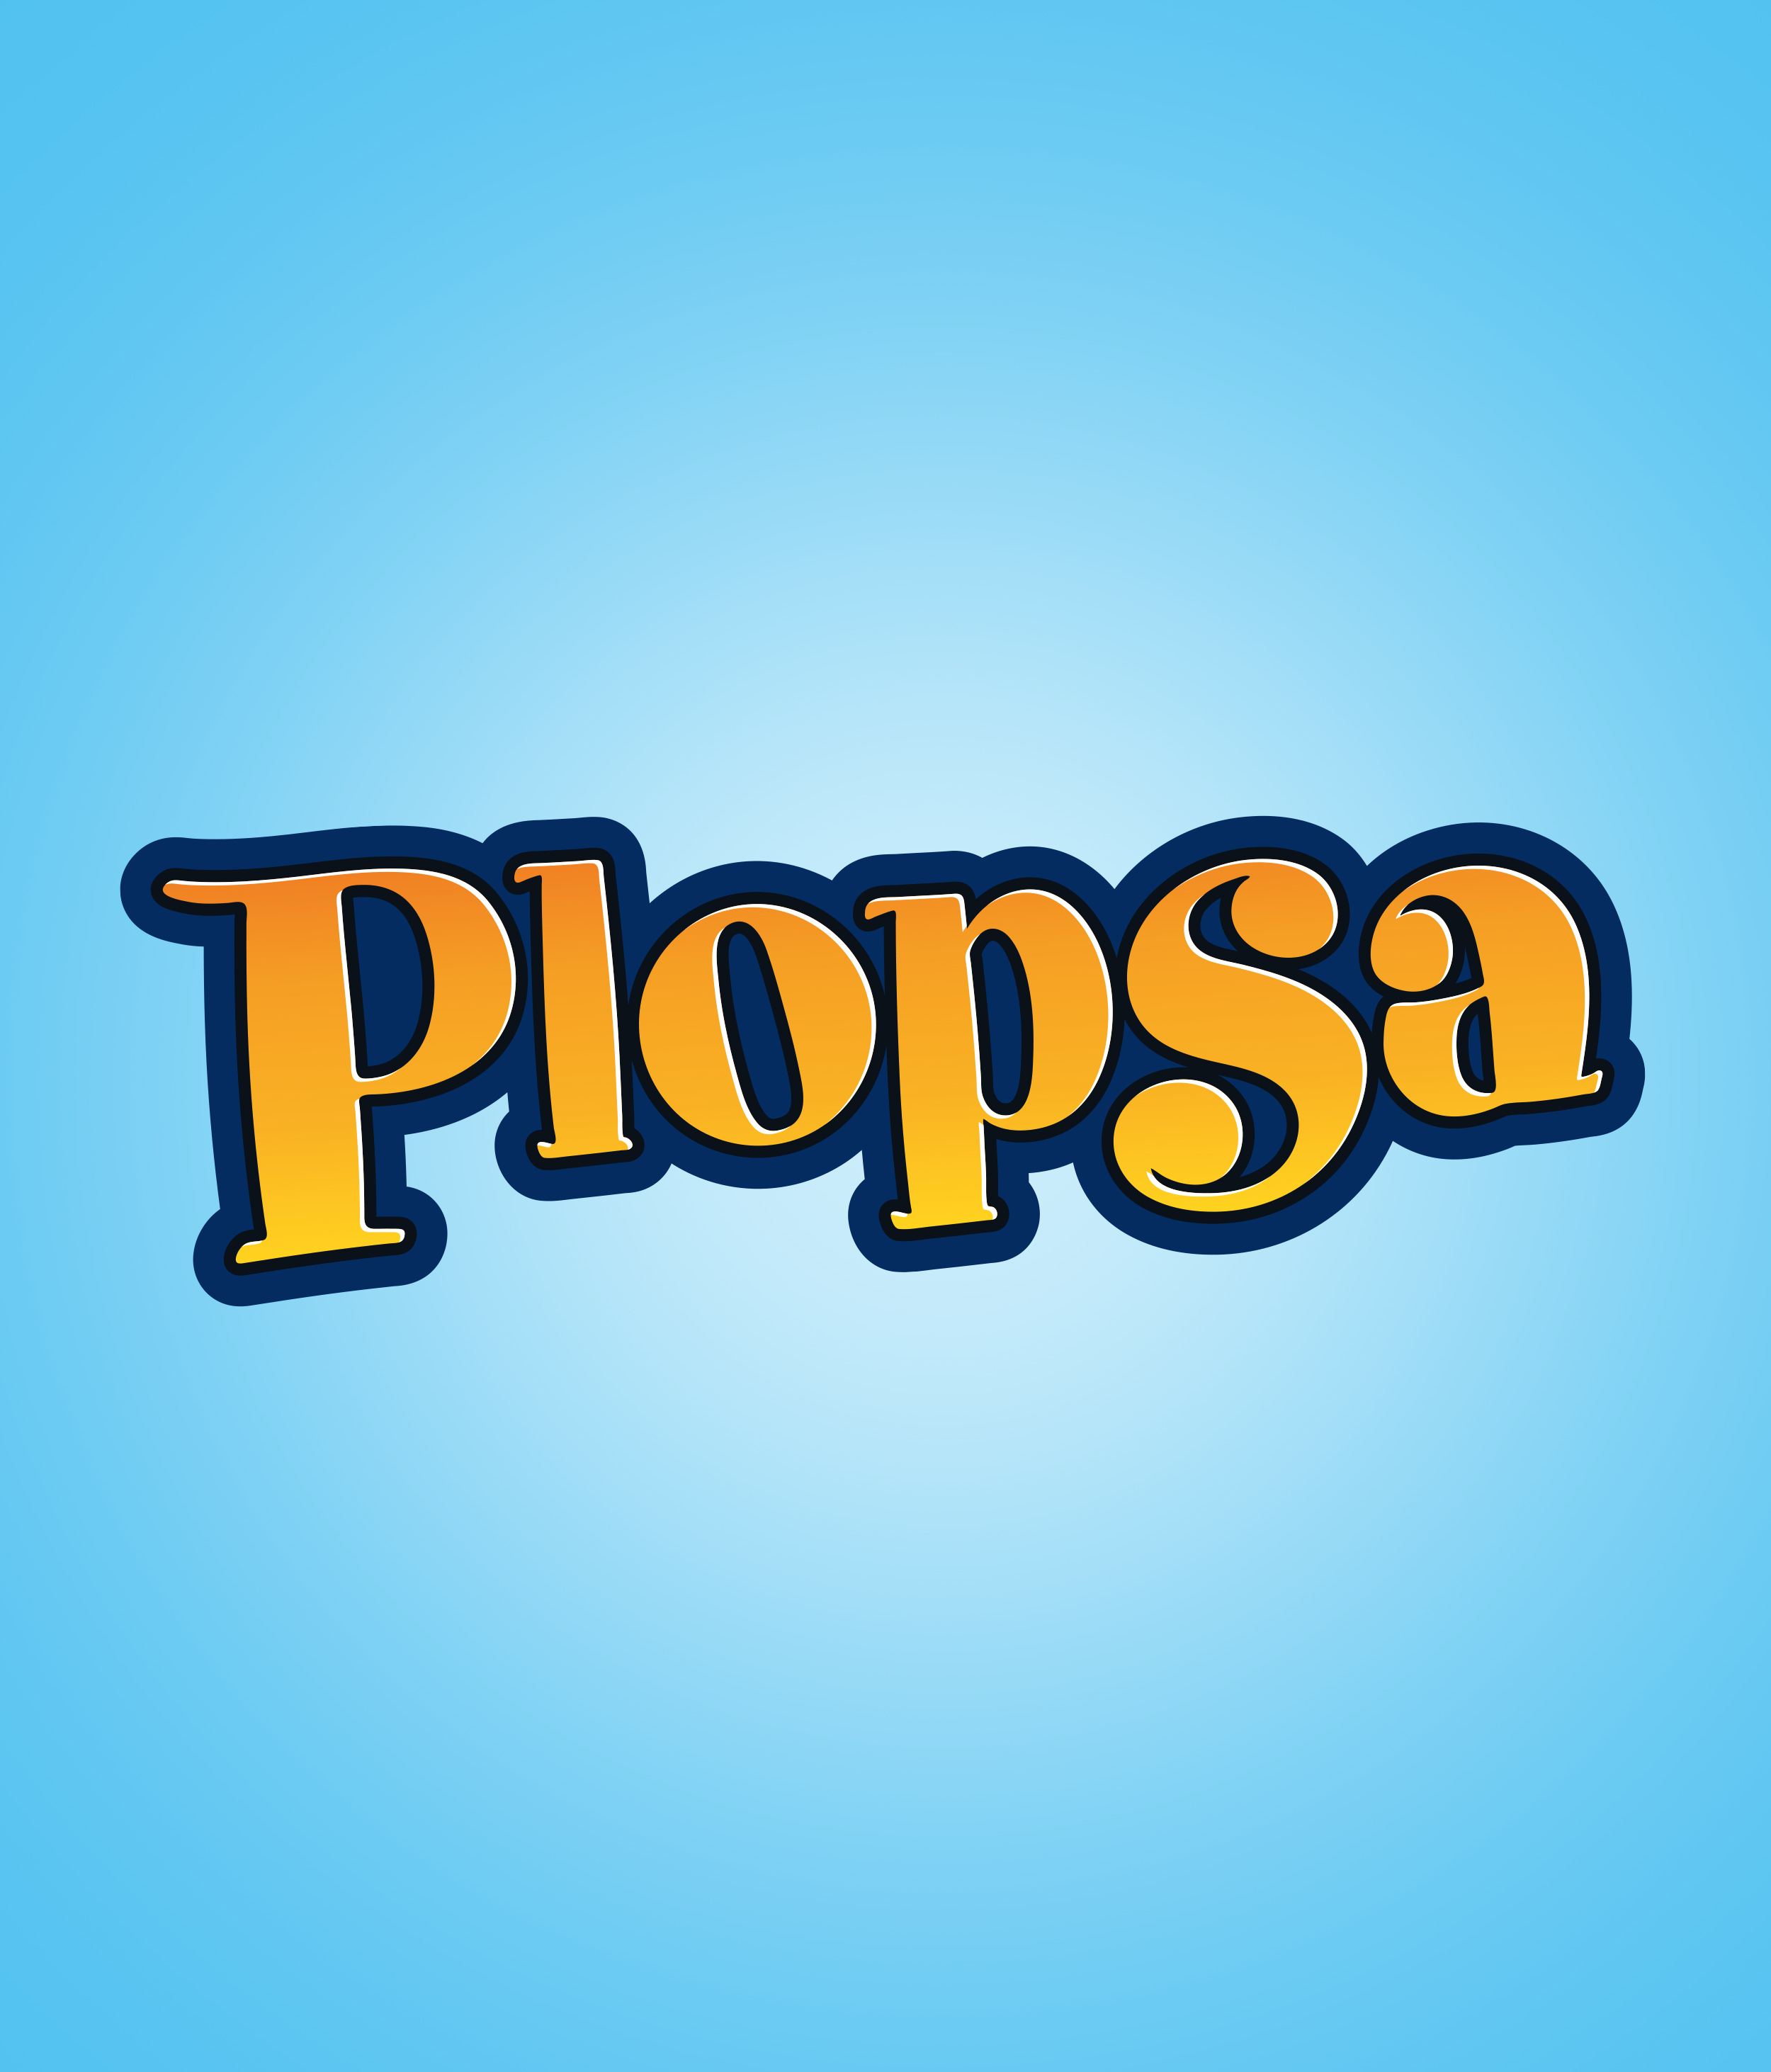 Plopsa Shop